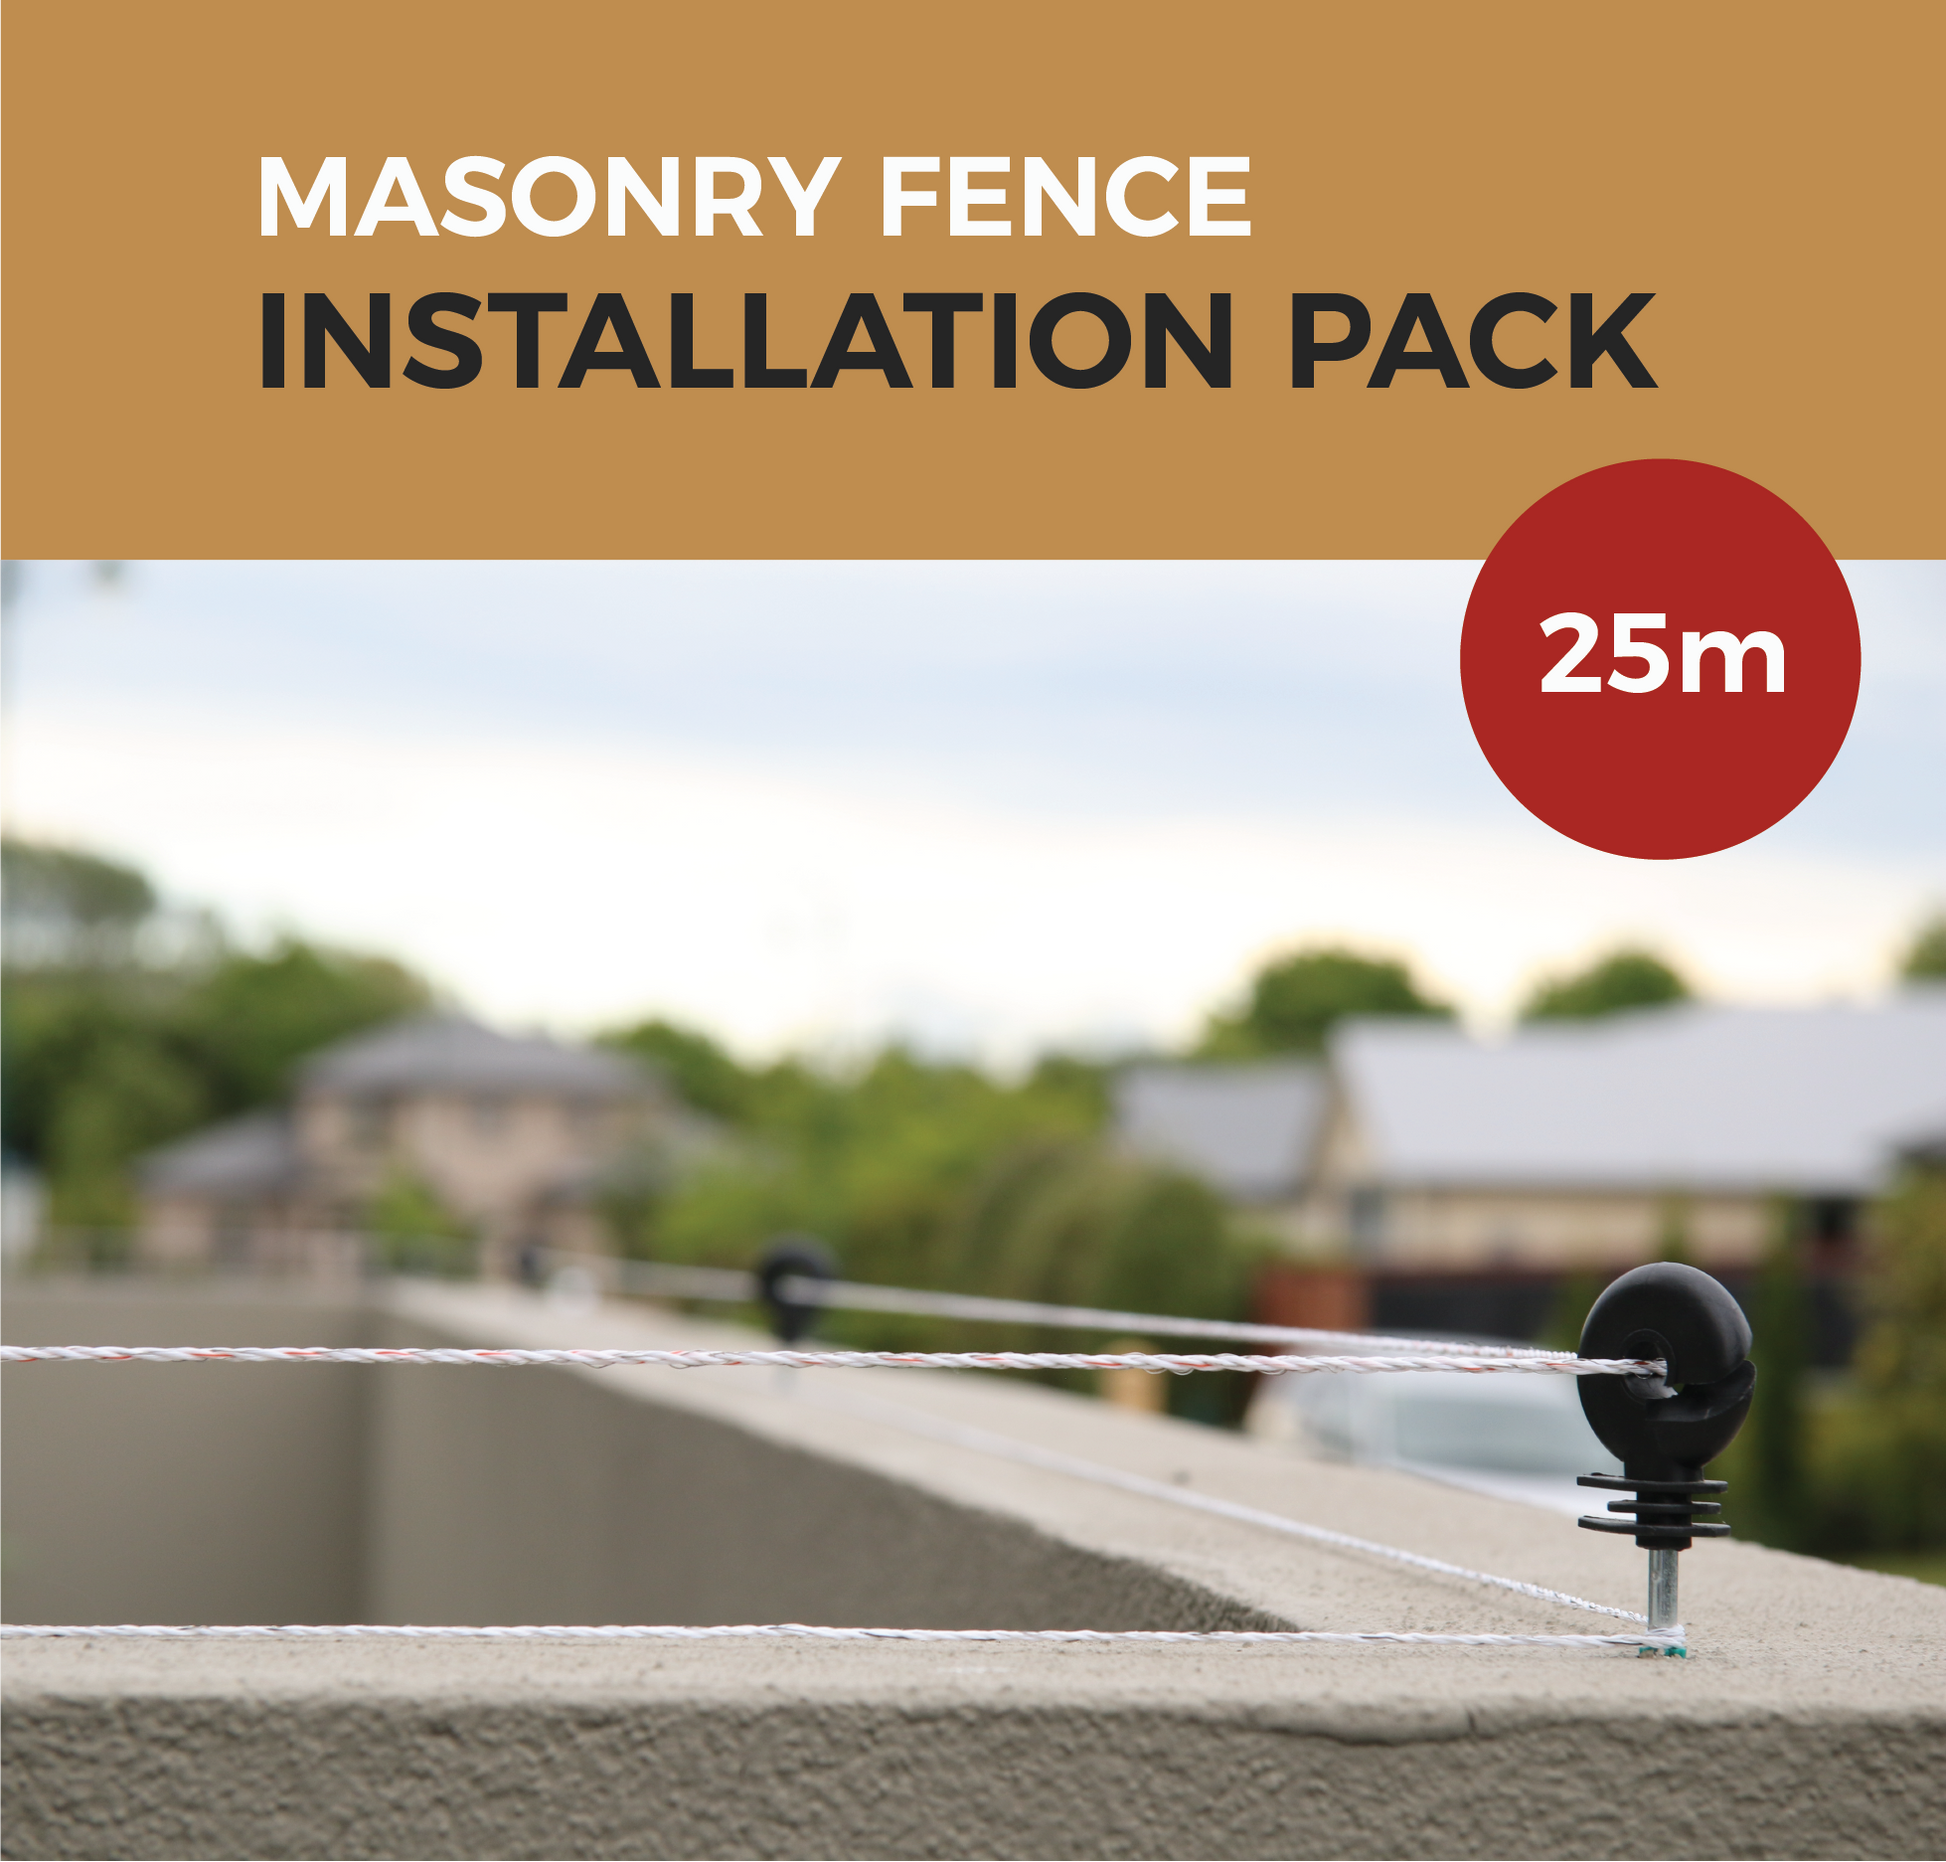 Cat Proof Fence Installation Pack - Masonry Fences 25m | SmartCatsStayHome